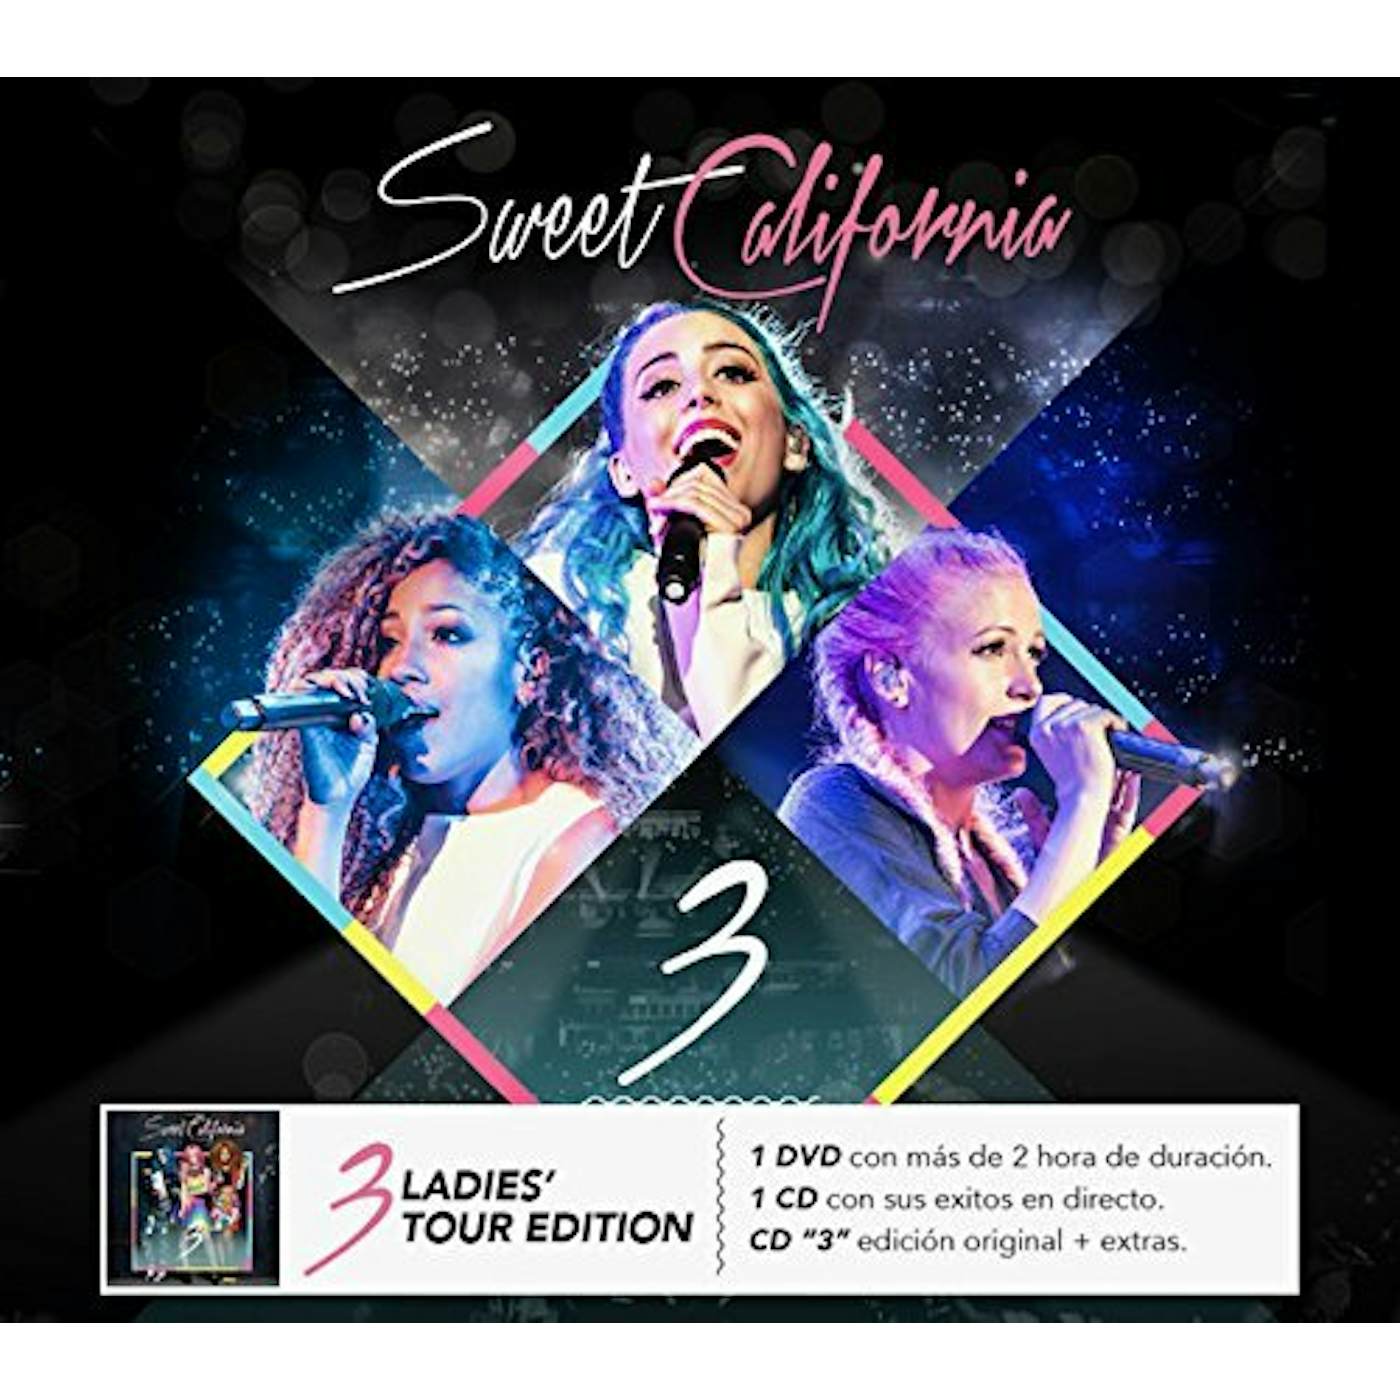 Sweet California 3 + LADIES TOUR CD